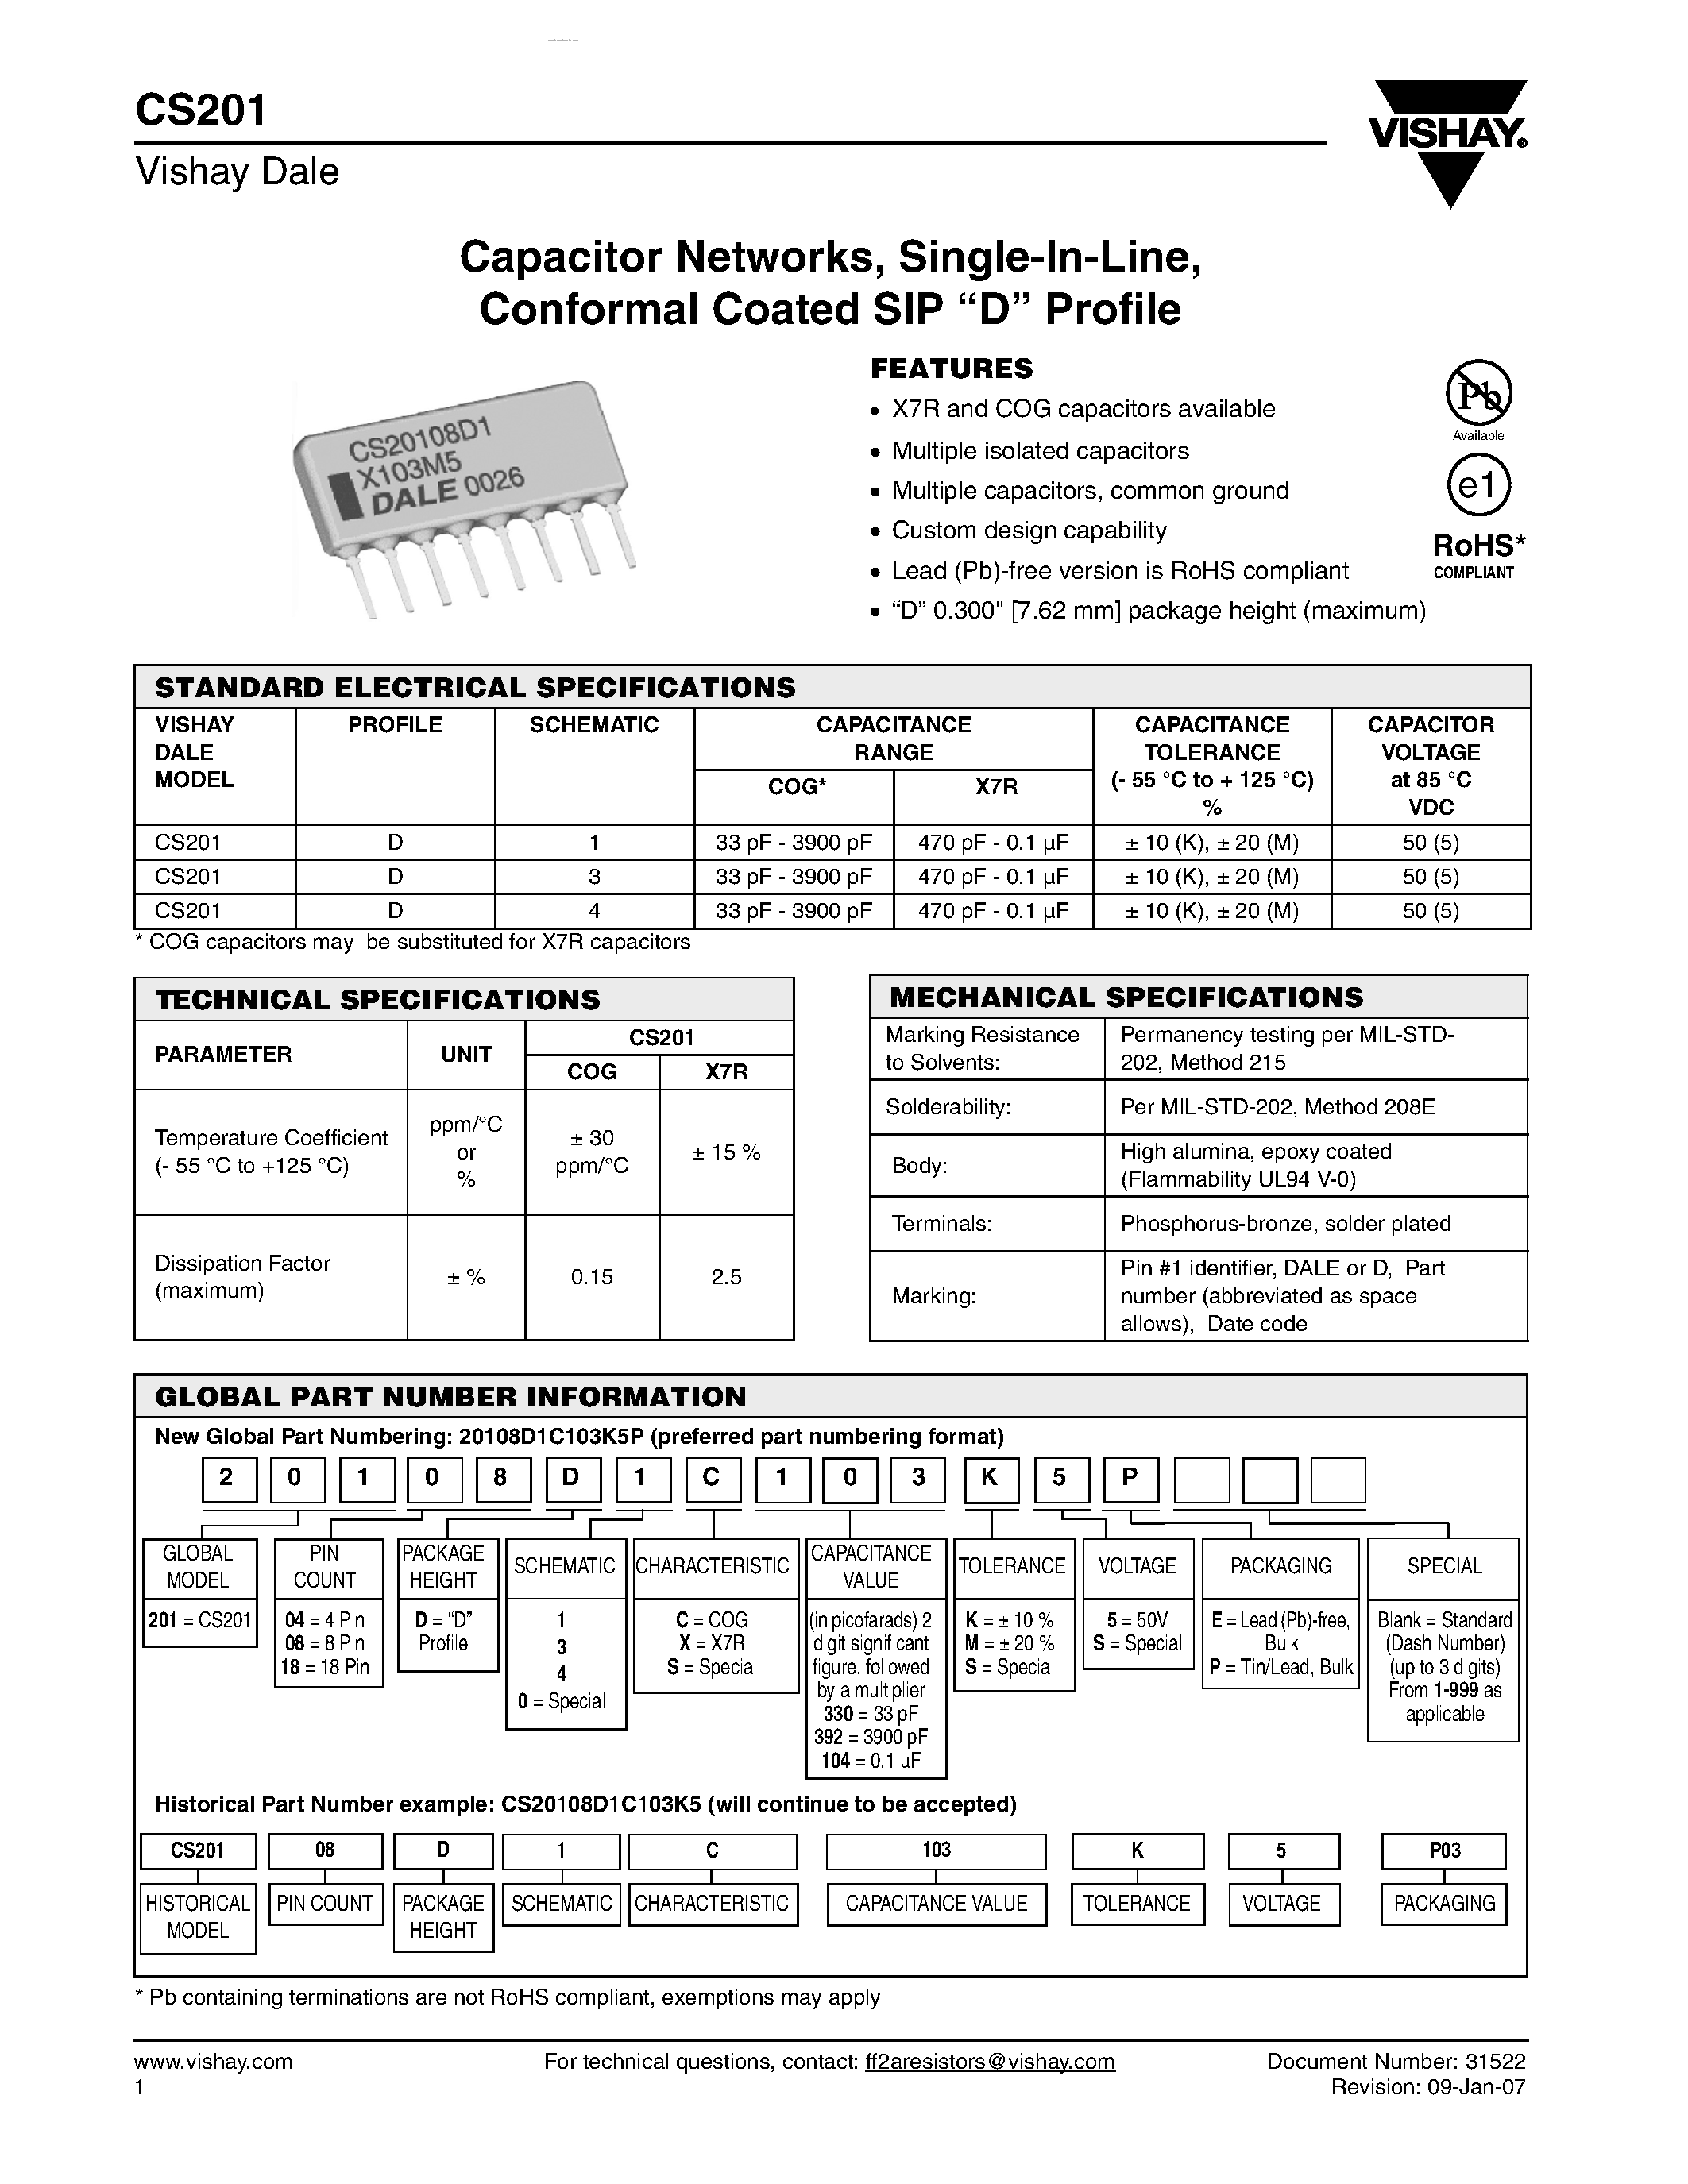 Datasheet CS201 - Conformal Coated SIP D Profile page 1